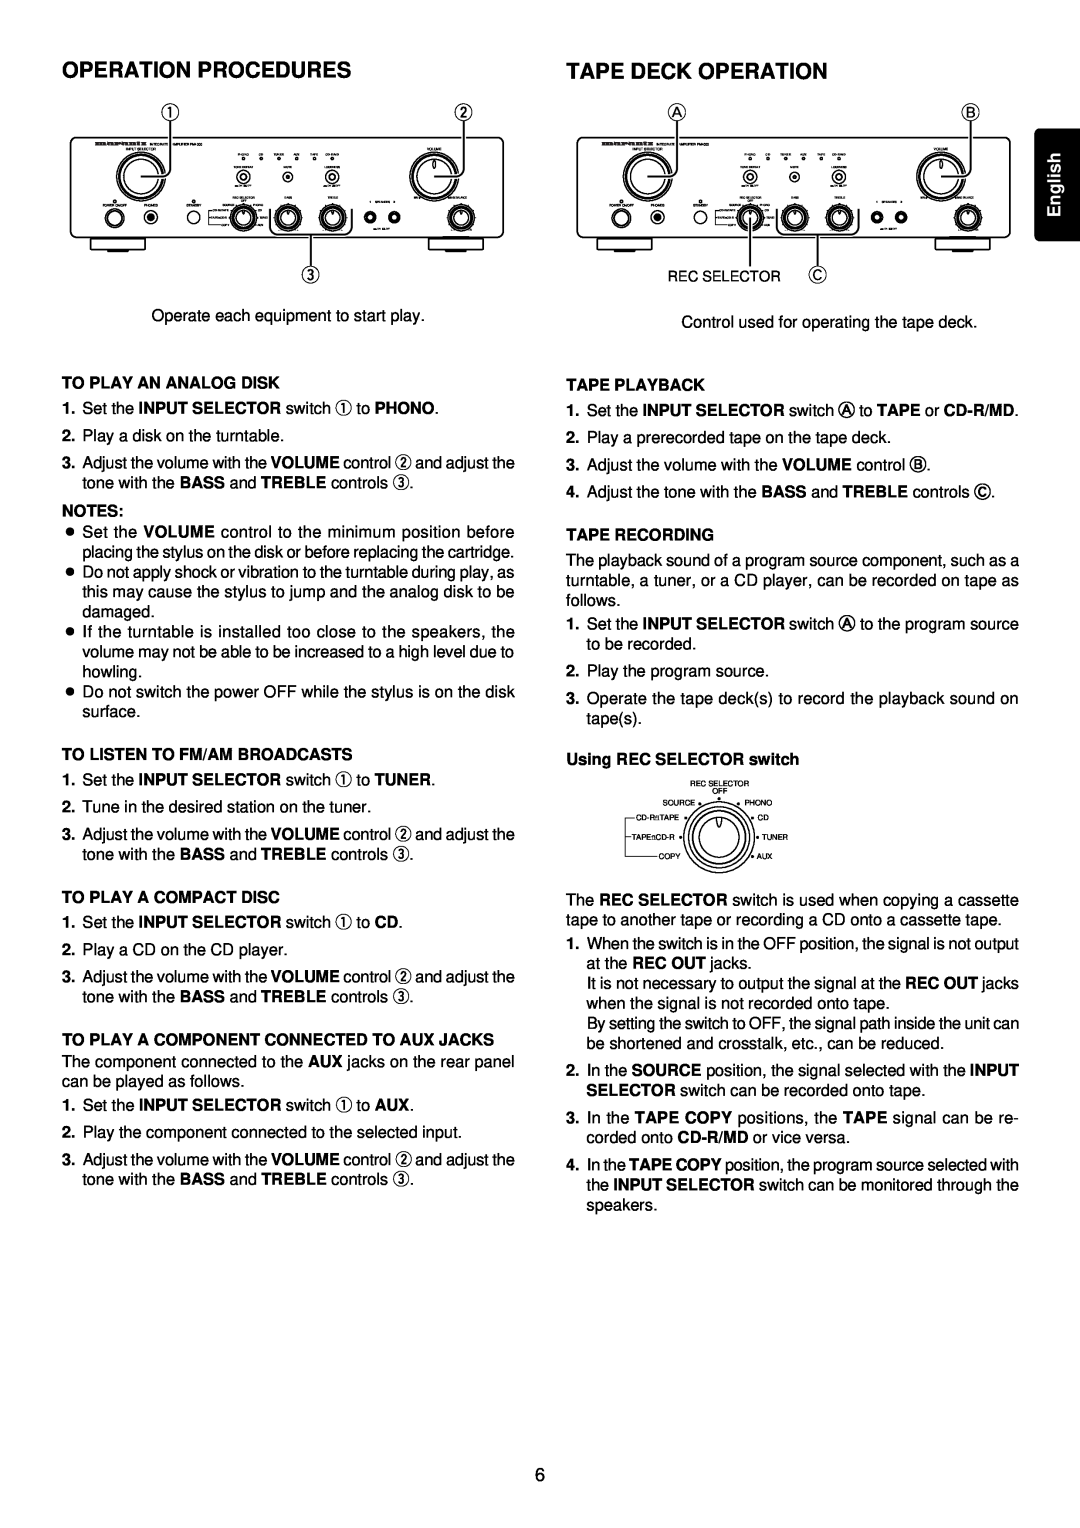 Marantz PM4000 manual Operation Procedures, Tape Deck Operation, English 